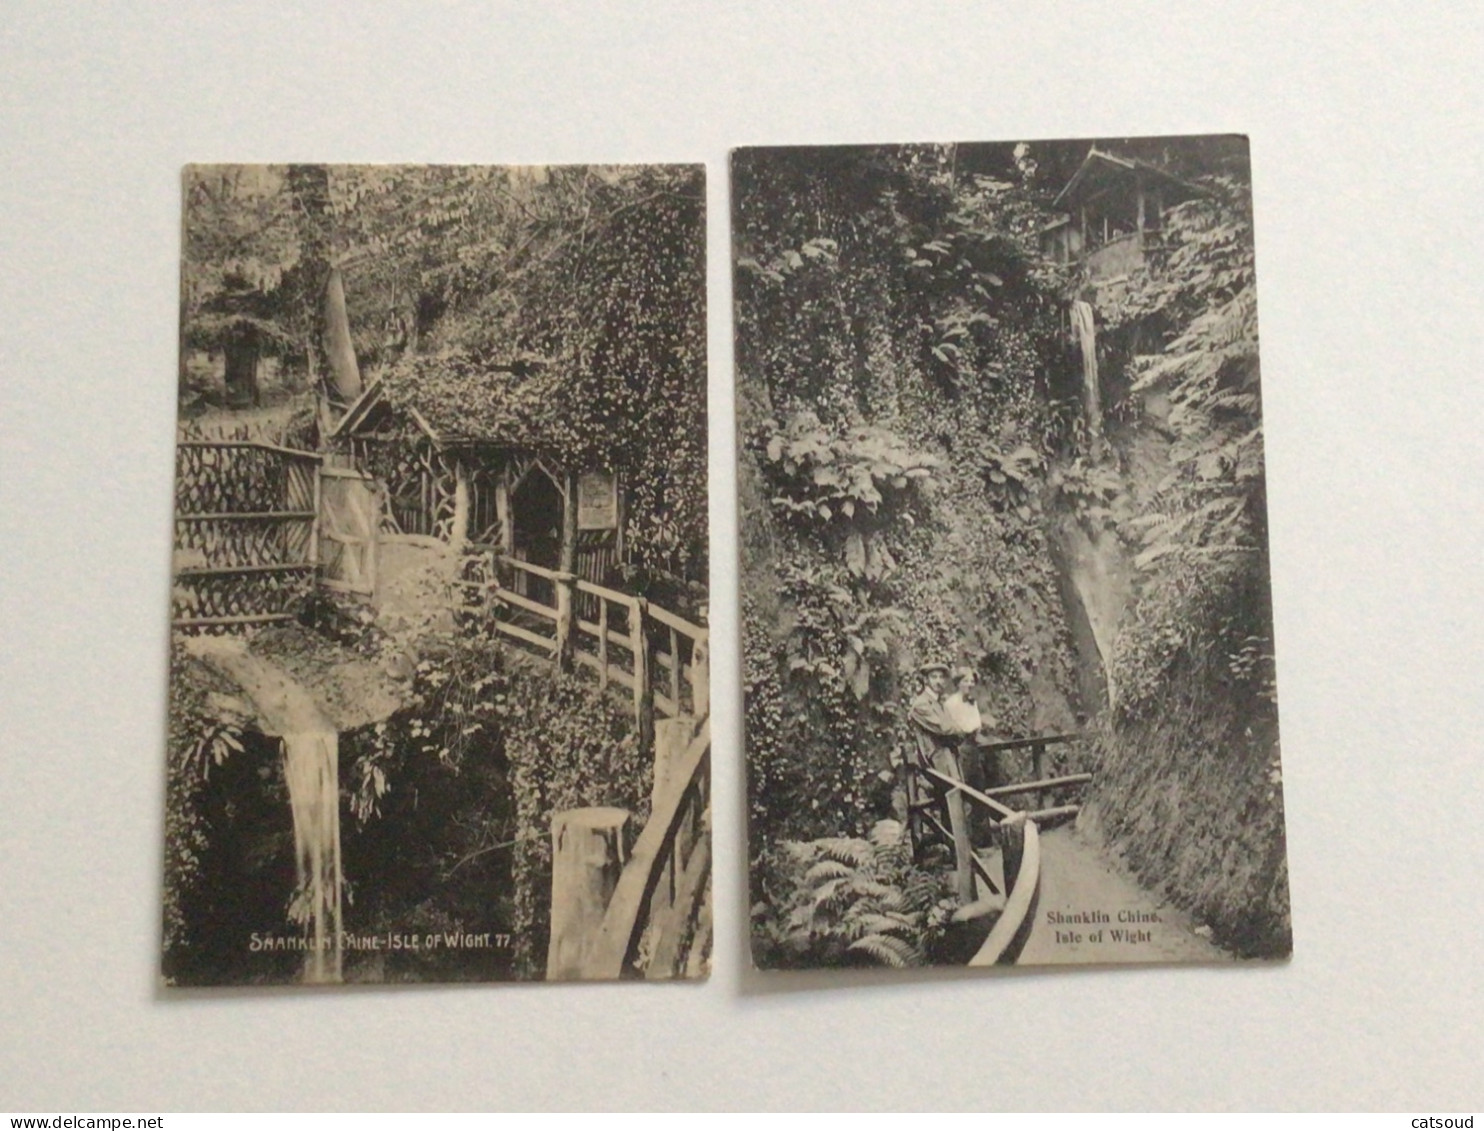 Lot De 2 Cartes Postales Anciennes  (1913) Shanklin Isle Of Wight - Shanklin